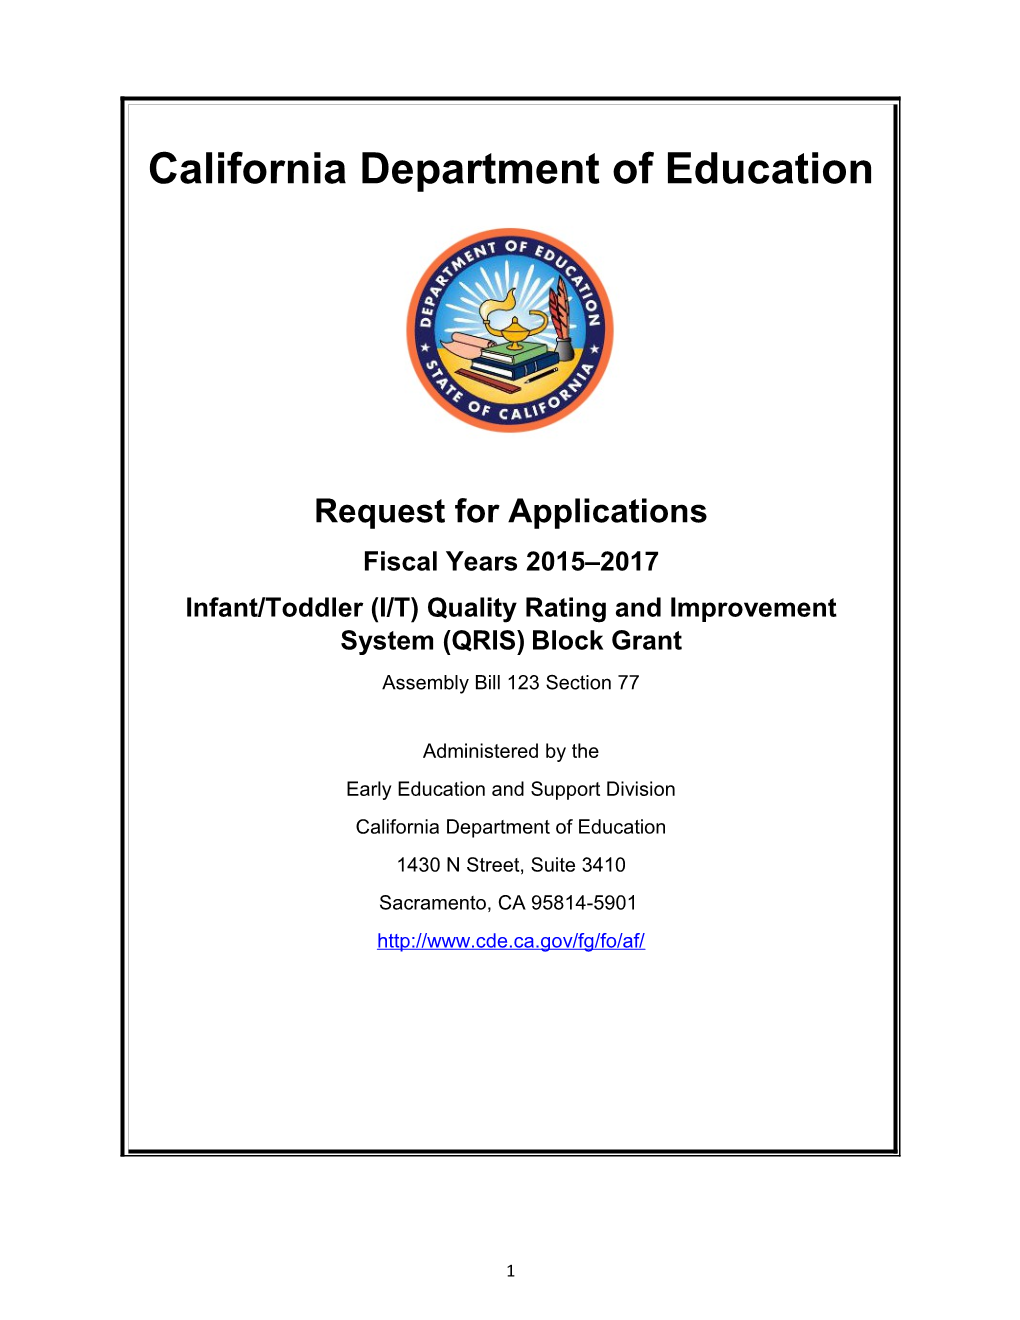 RFA-15: Child Development (CA Dept of Education)